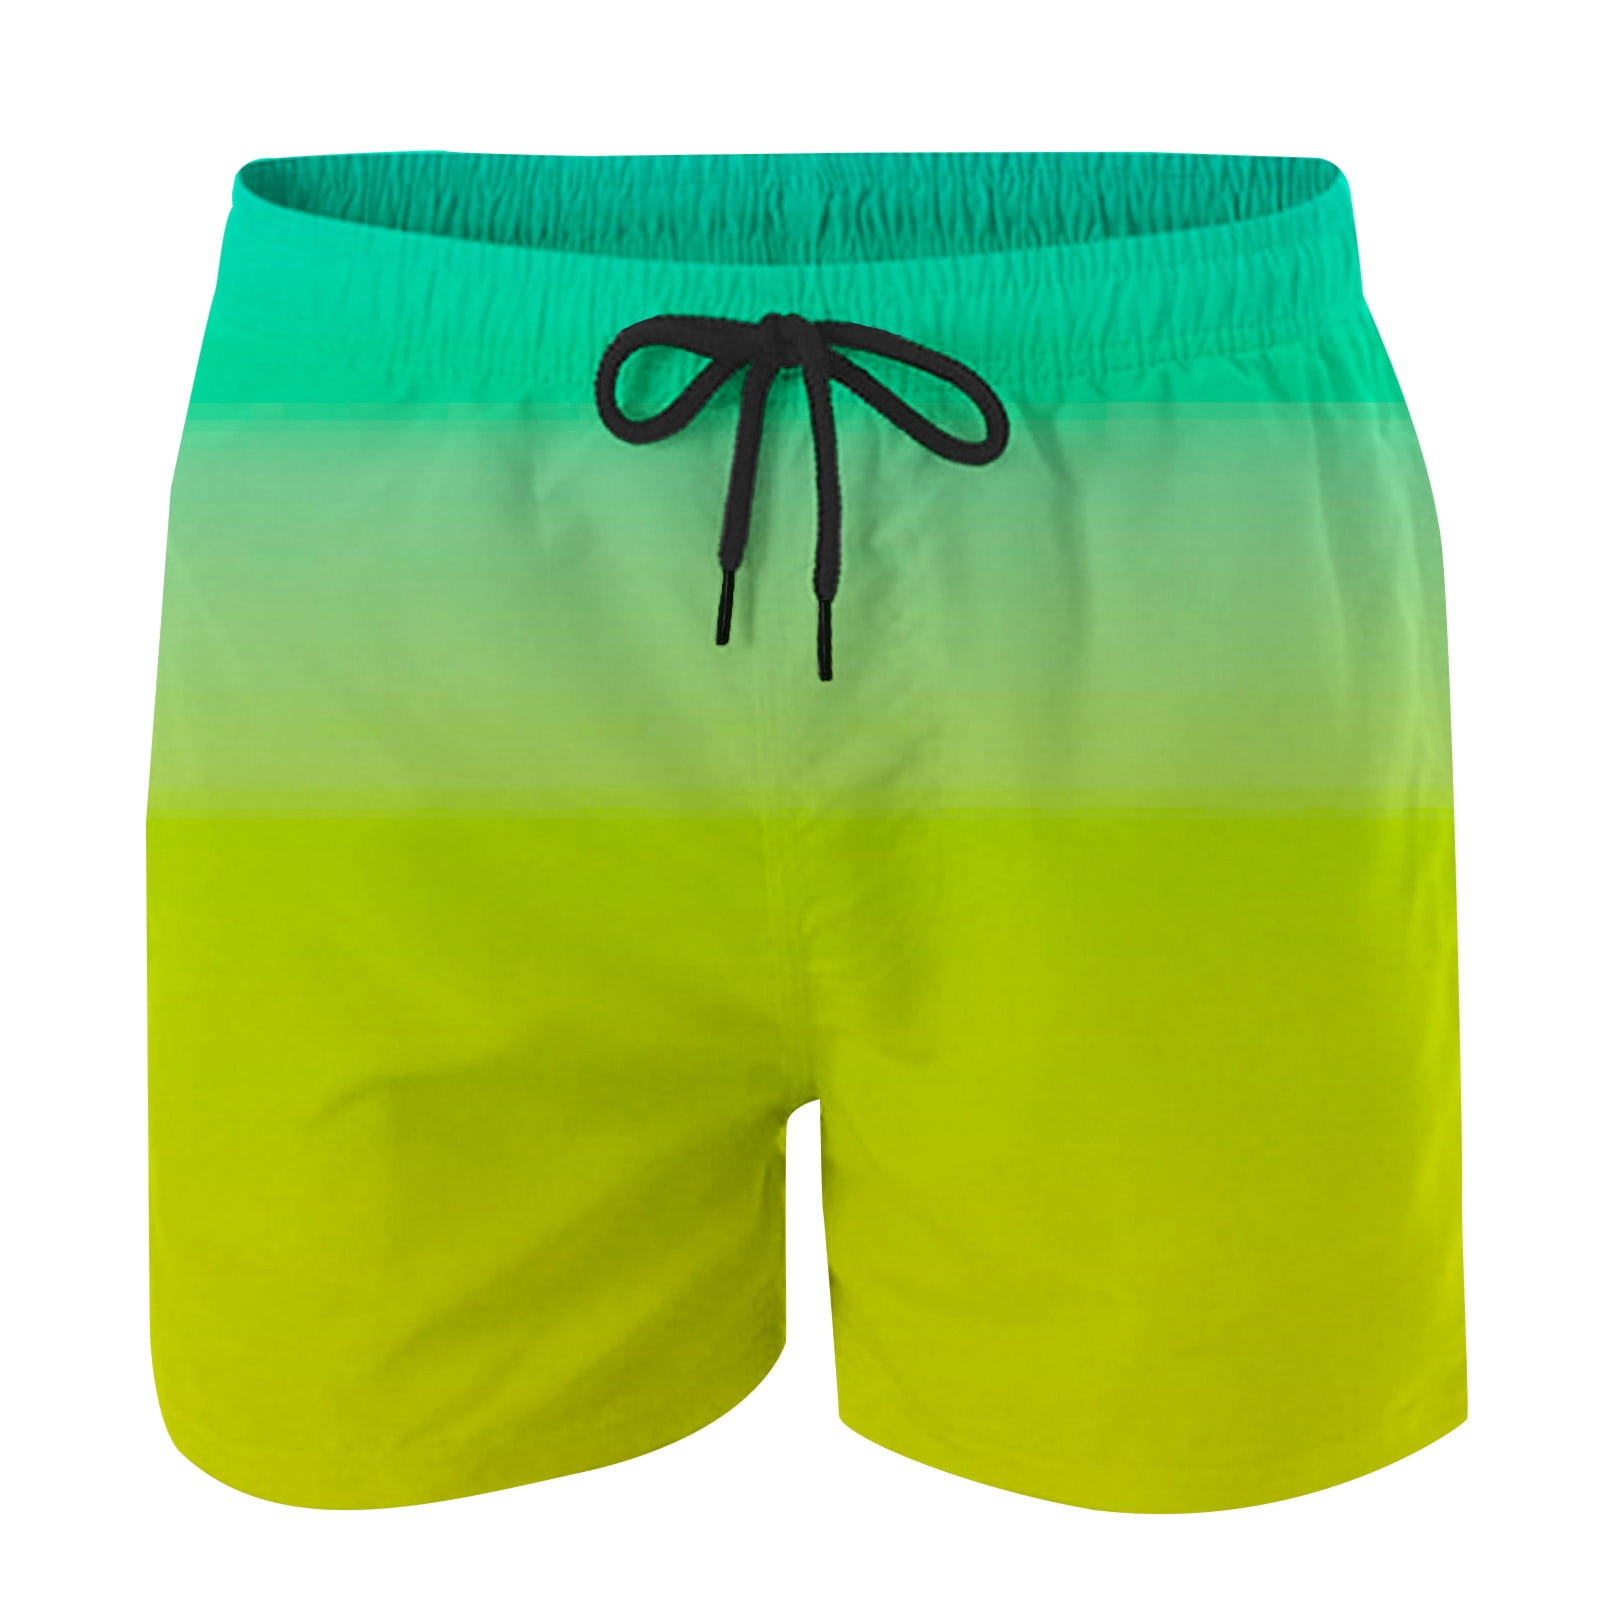 Vikakiooze Men's Gradient Swim Shorts Summer Quick Dry Pocket Beach ...